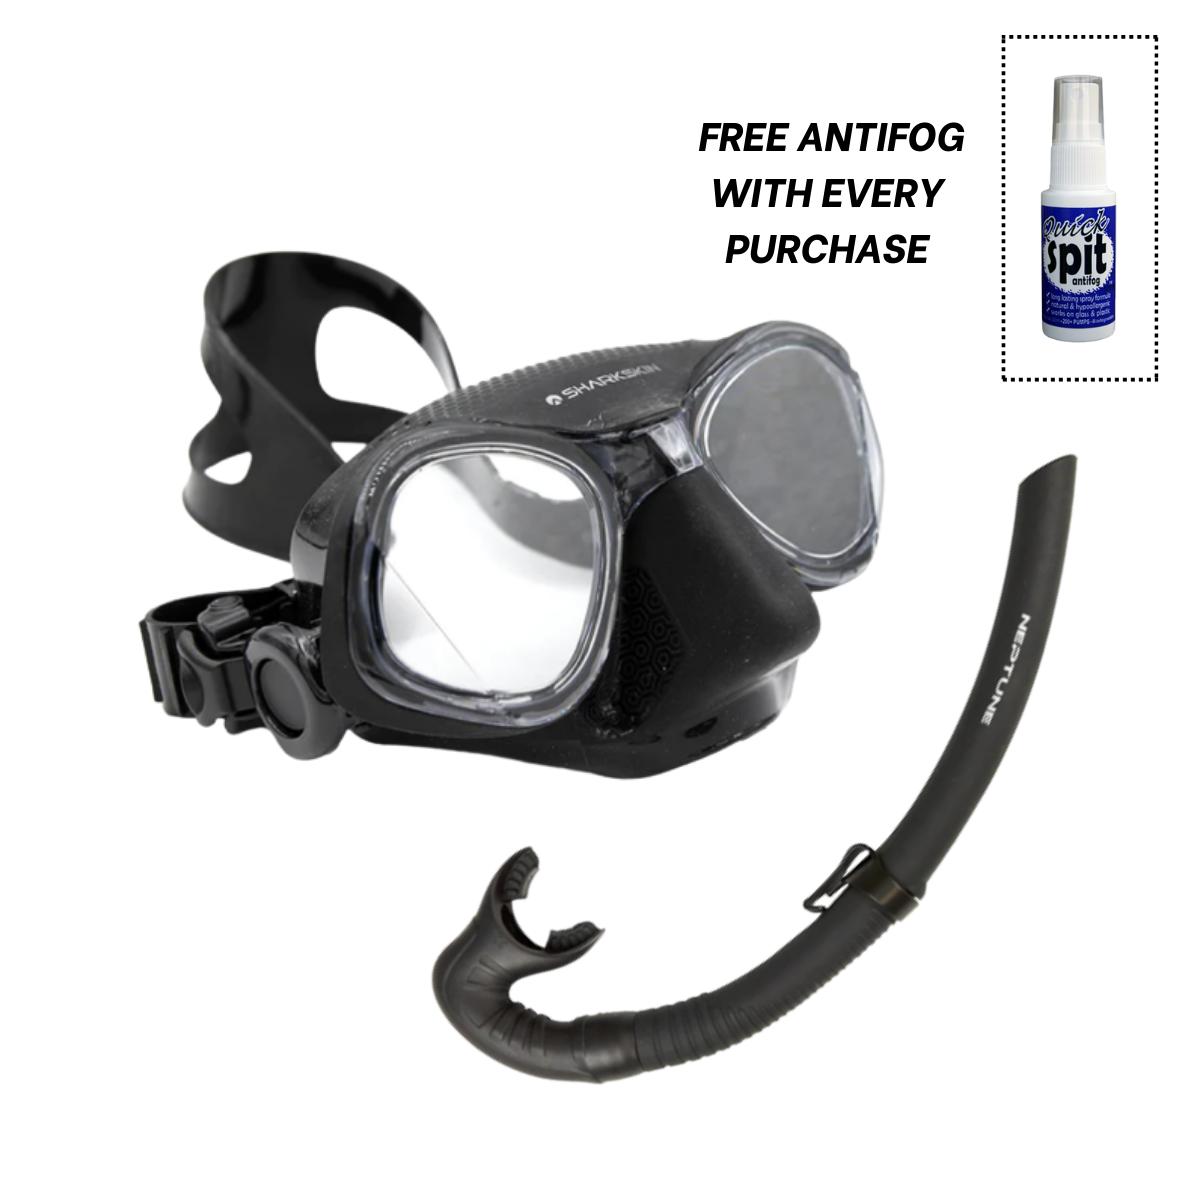 ULTRALITE 400 DUAL & Neptune S4 Silicone Blast Snorkel + Free Antifog Value $15.00